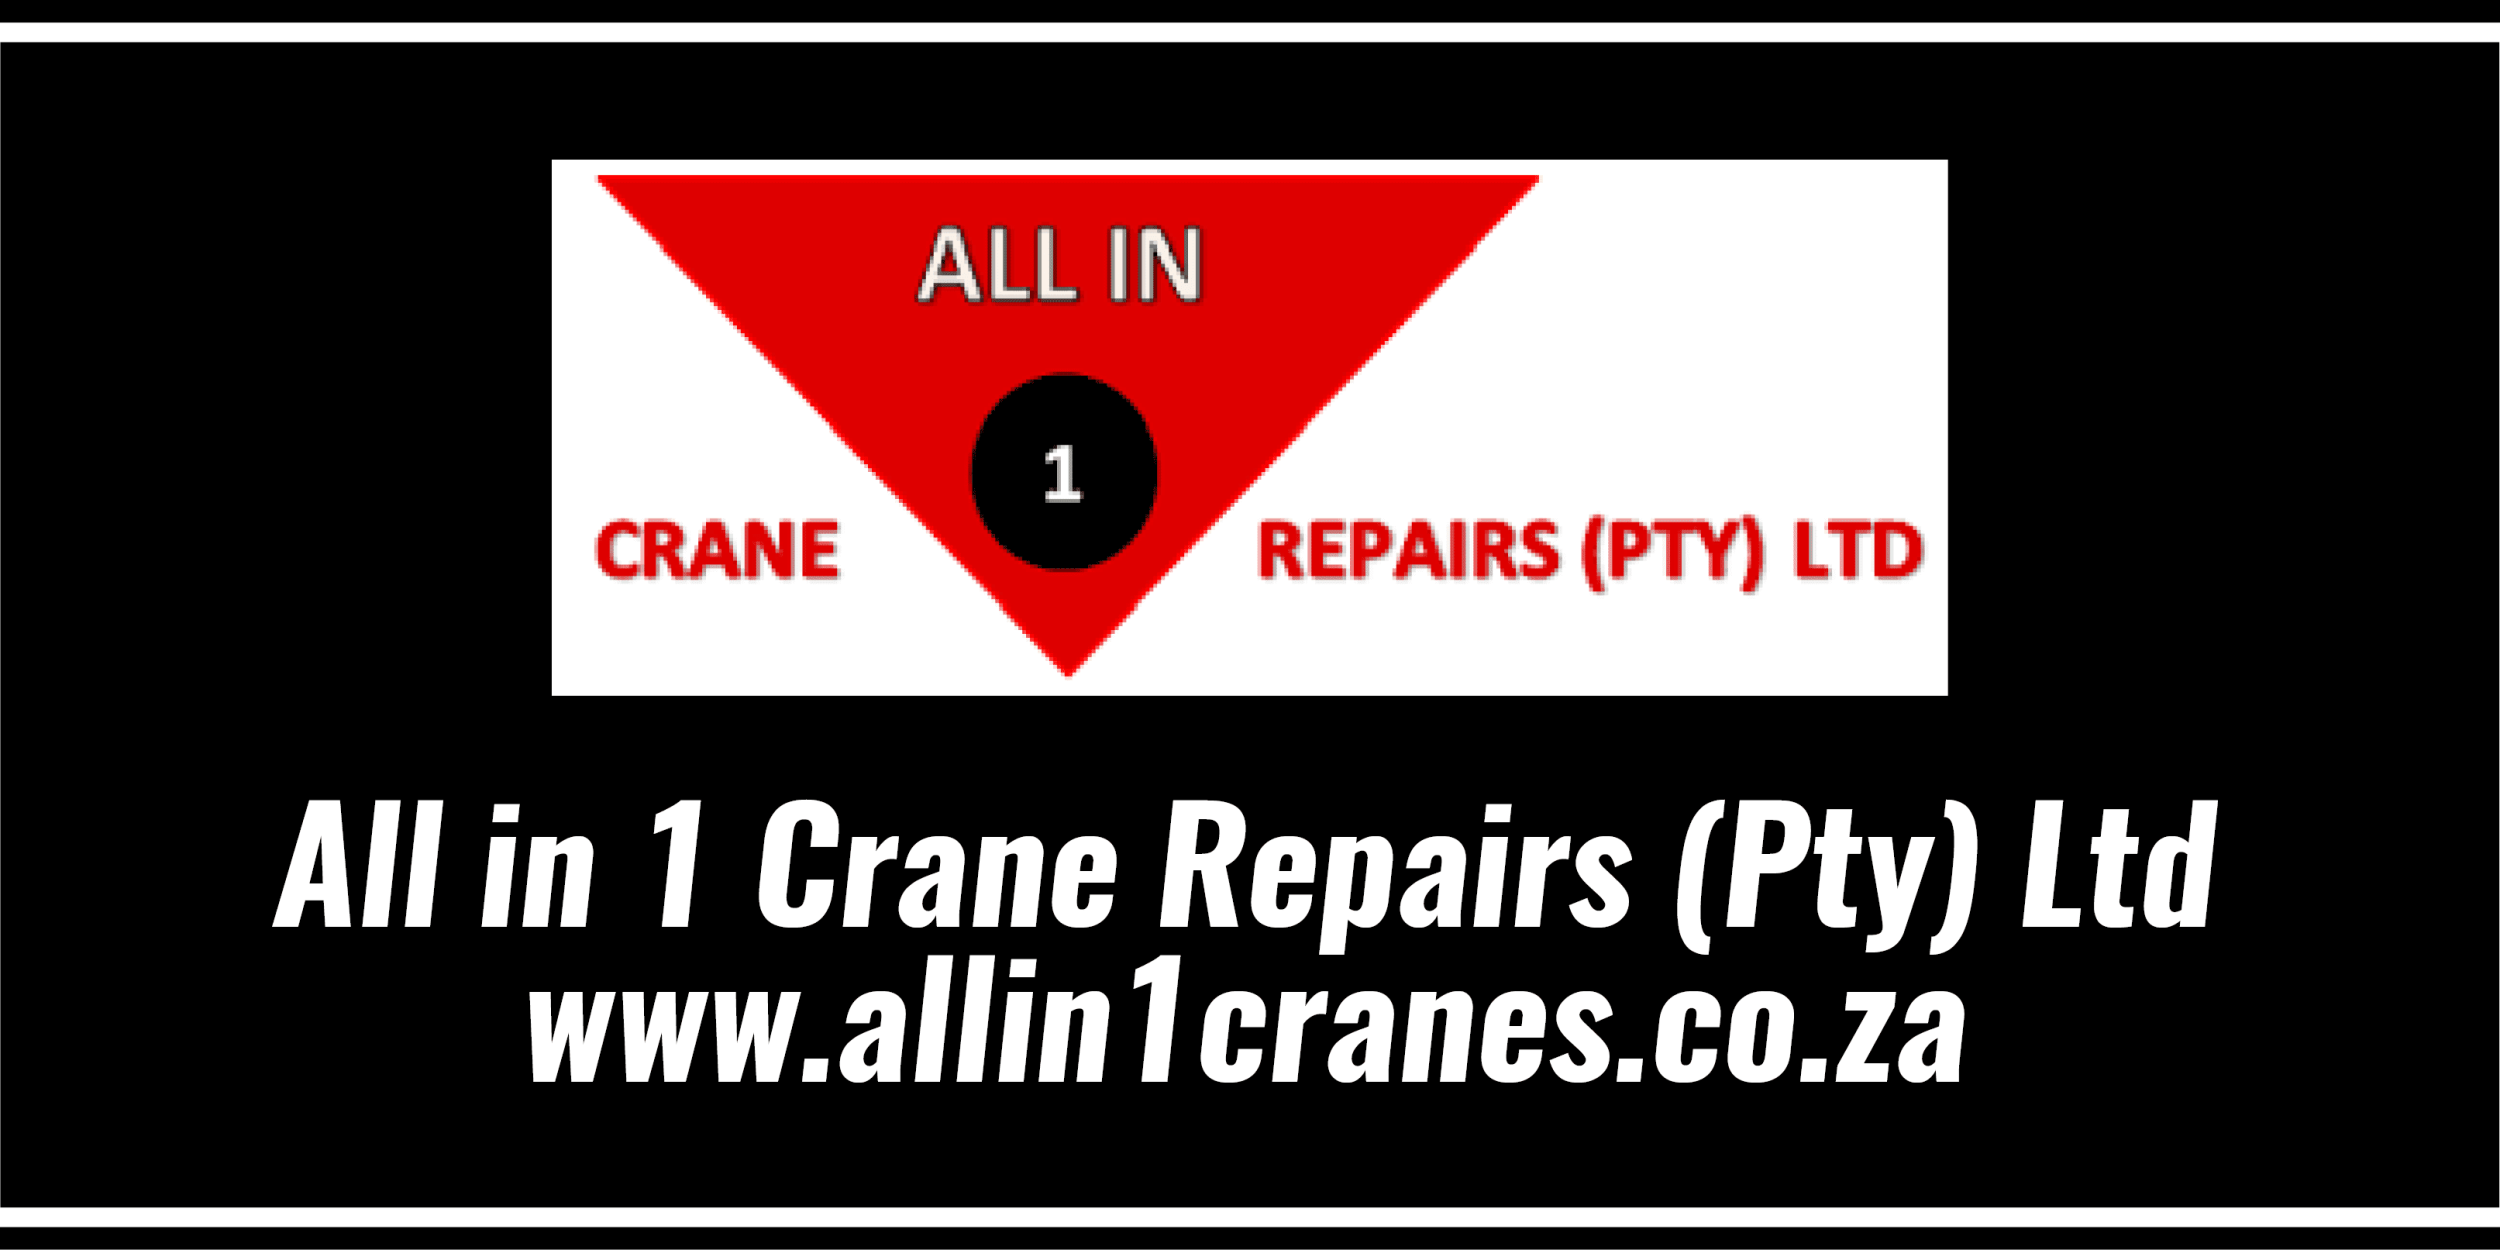 All in 1 Crane Repairs (Pty) Ltd